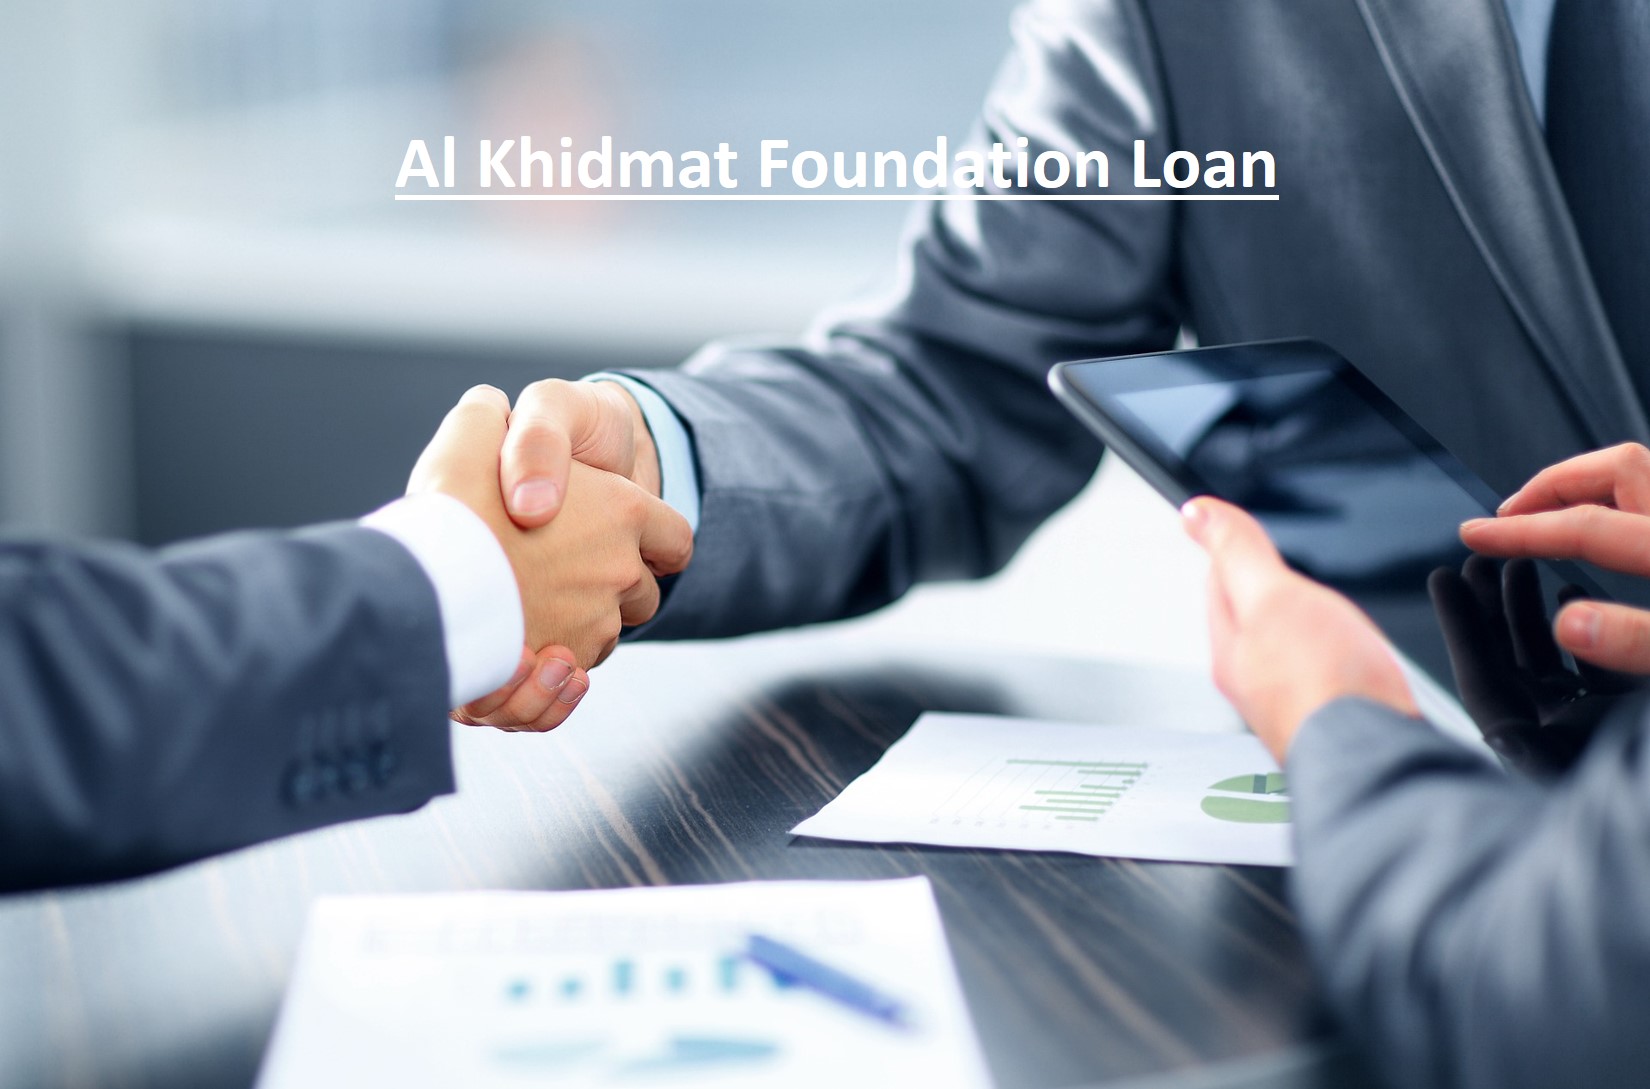 Al khidmat foundation loan program